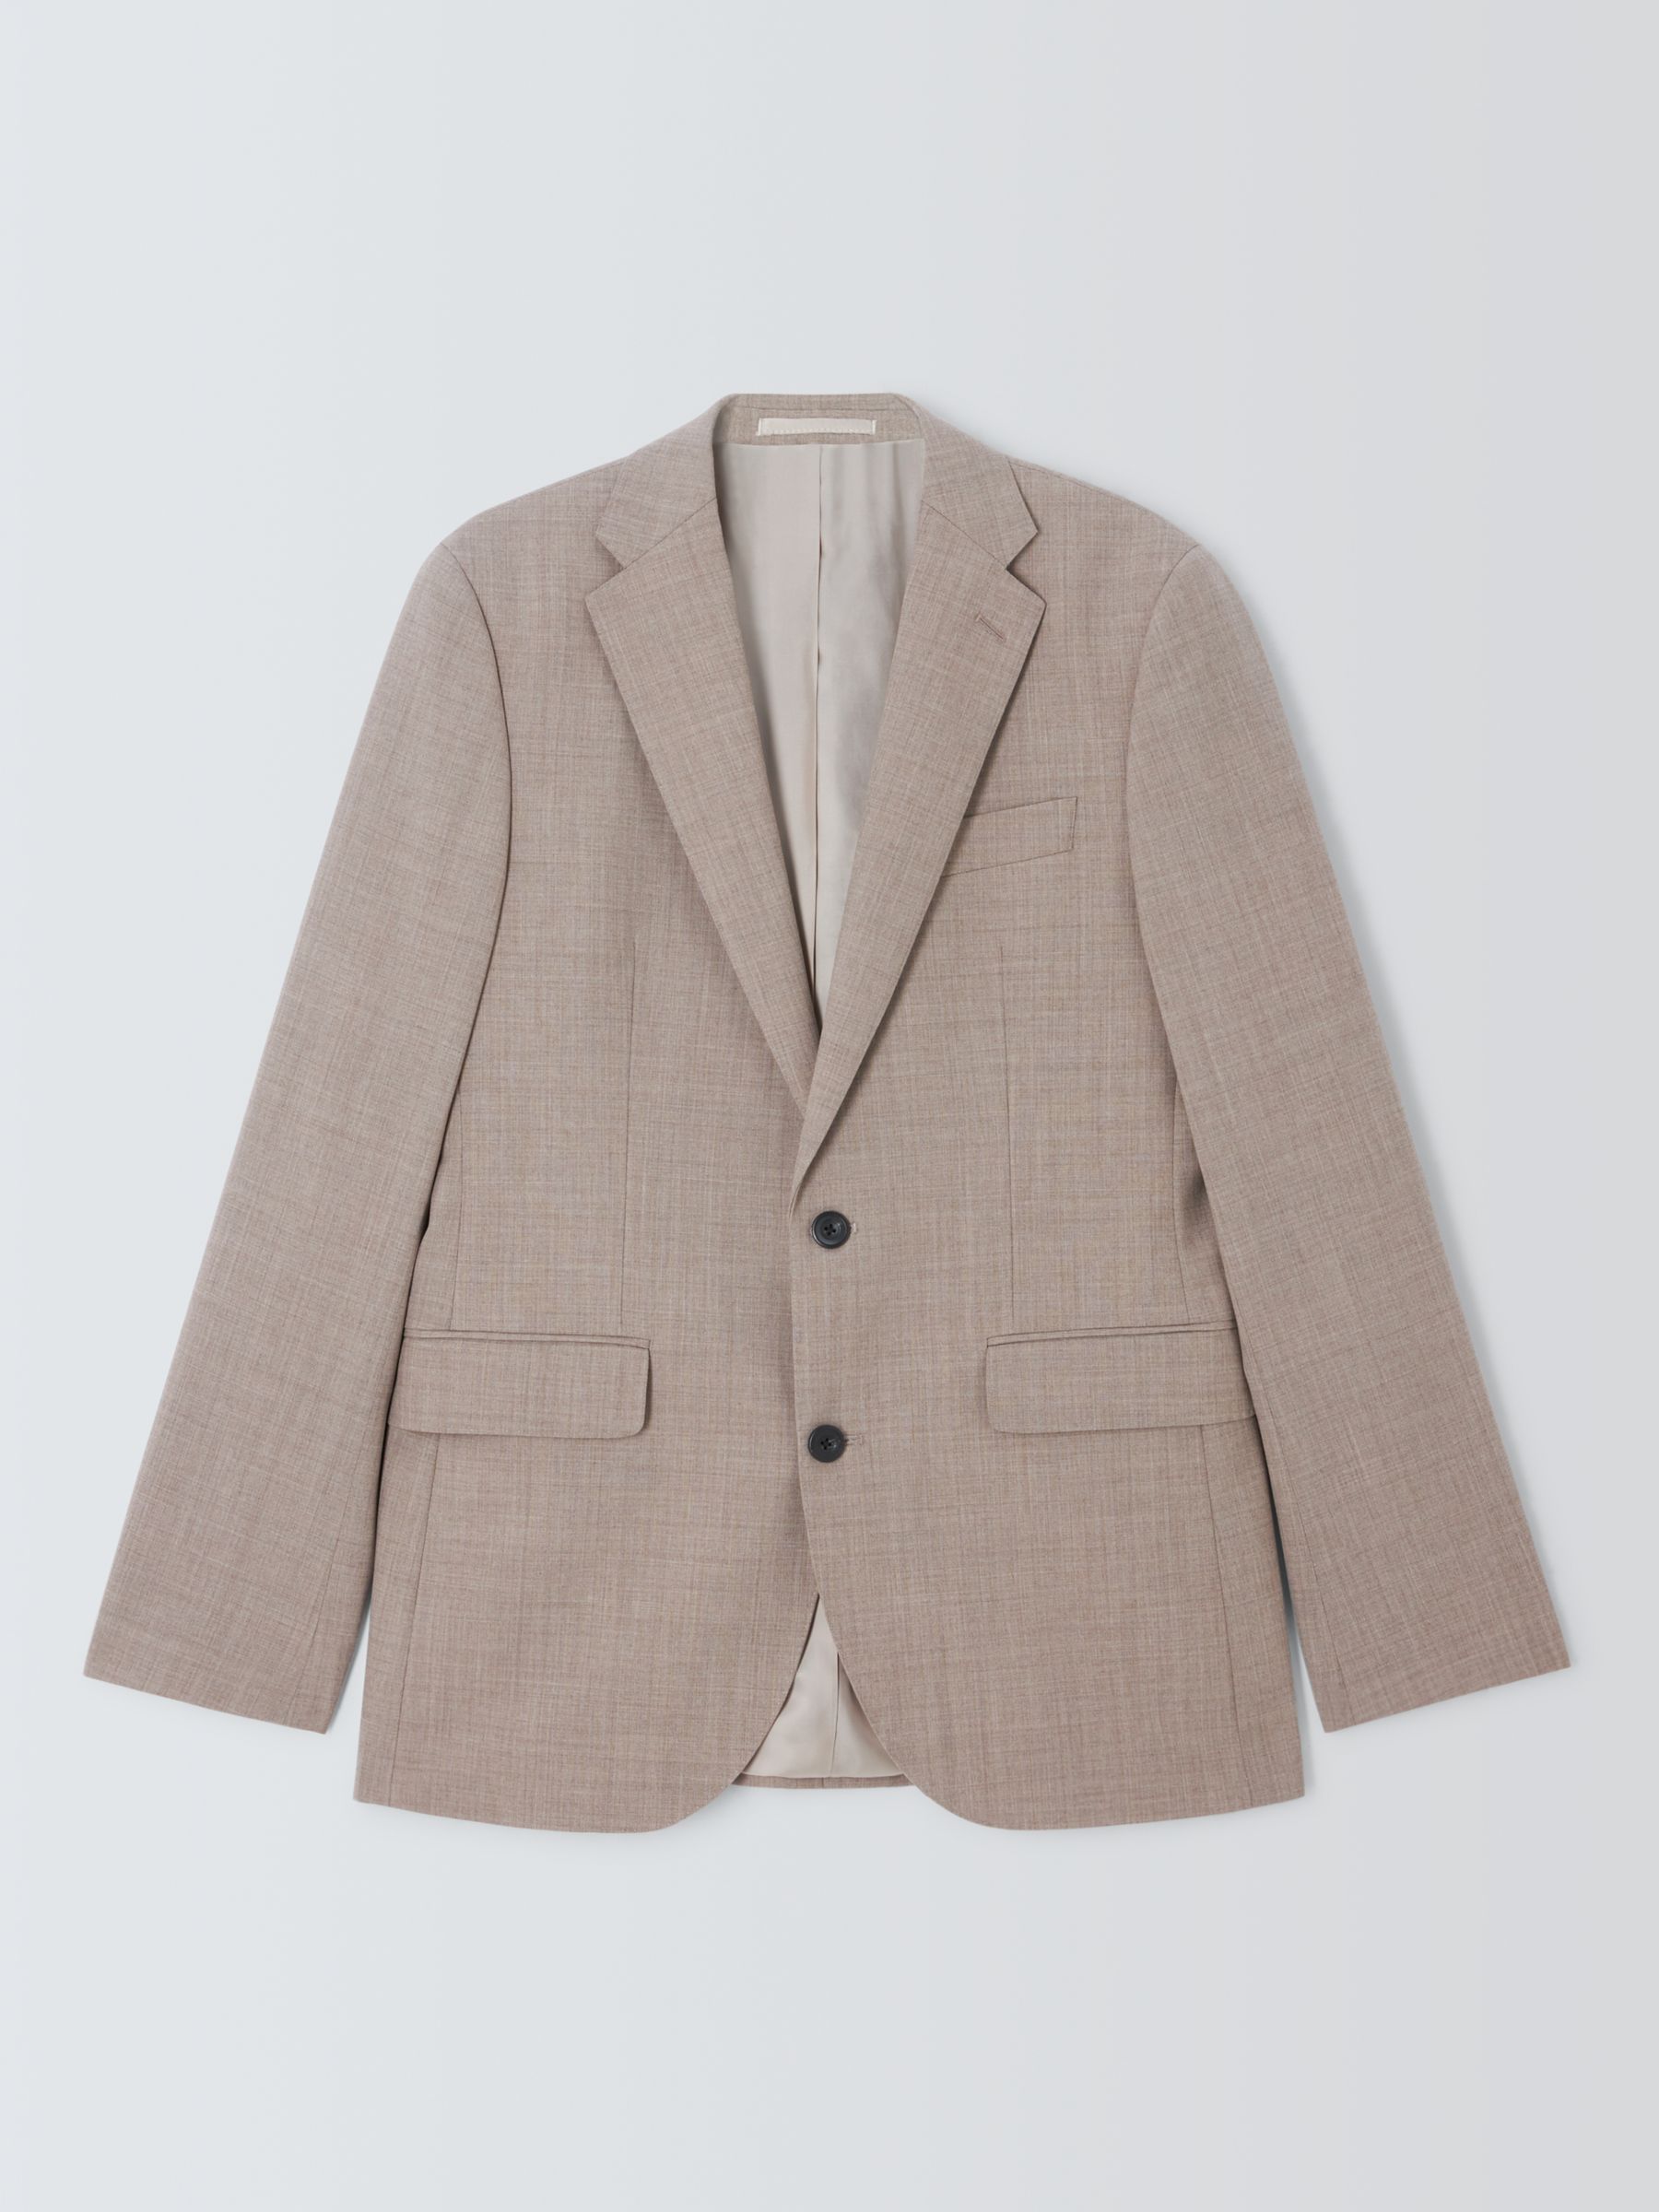 John Lewis Stowe Regular Fit Wool Suit Jacket, Sand, 42L